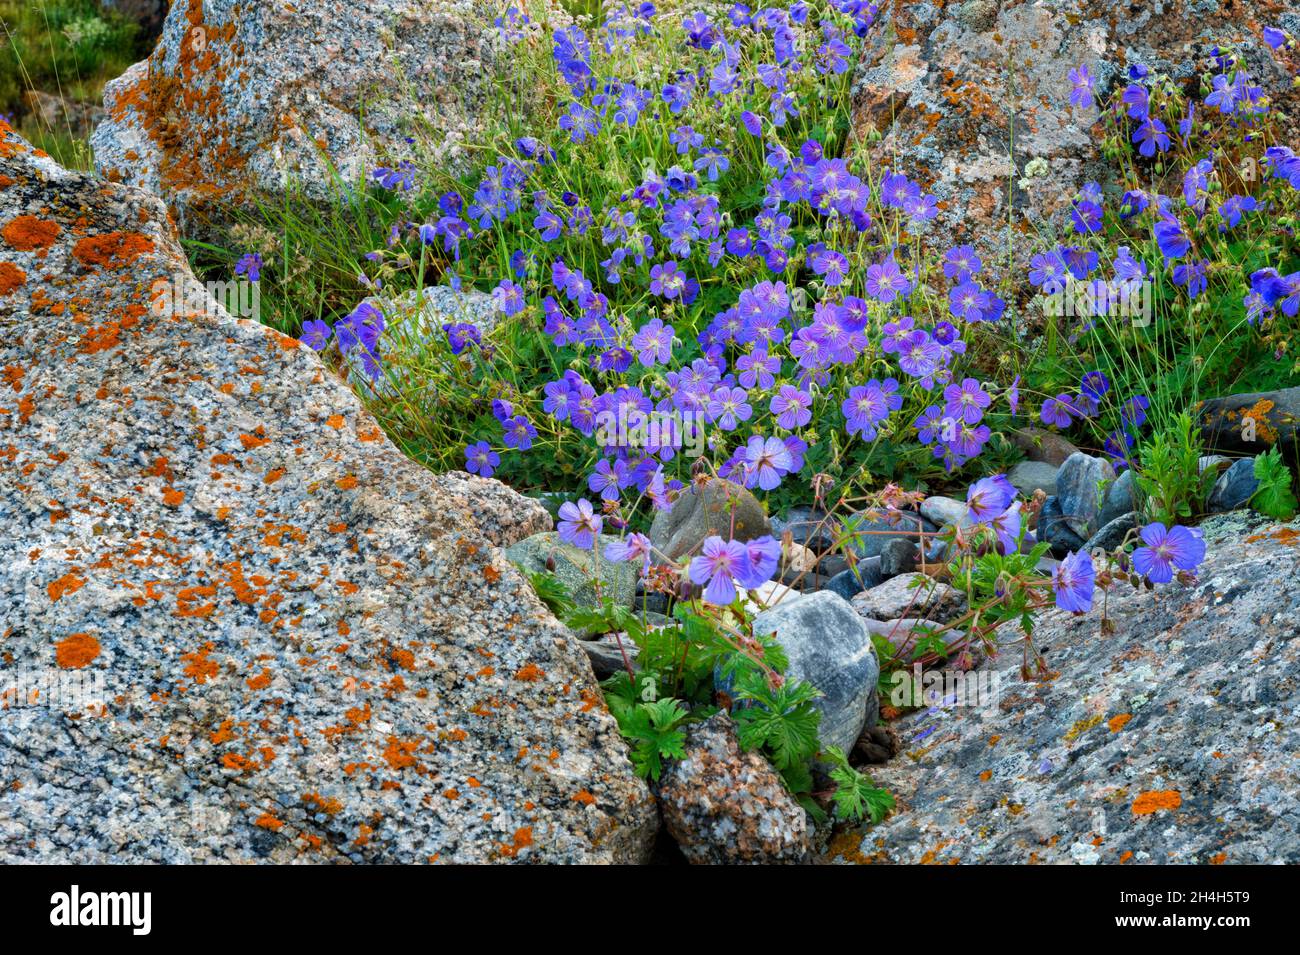 Geranium collinum growing among lichen-covered rocks, Naryn Gorge, Naryn Region, Kyrgyzstan Stock Photo